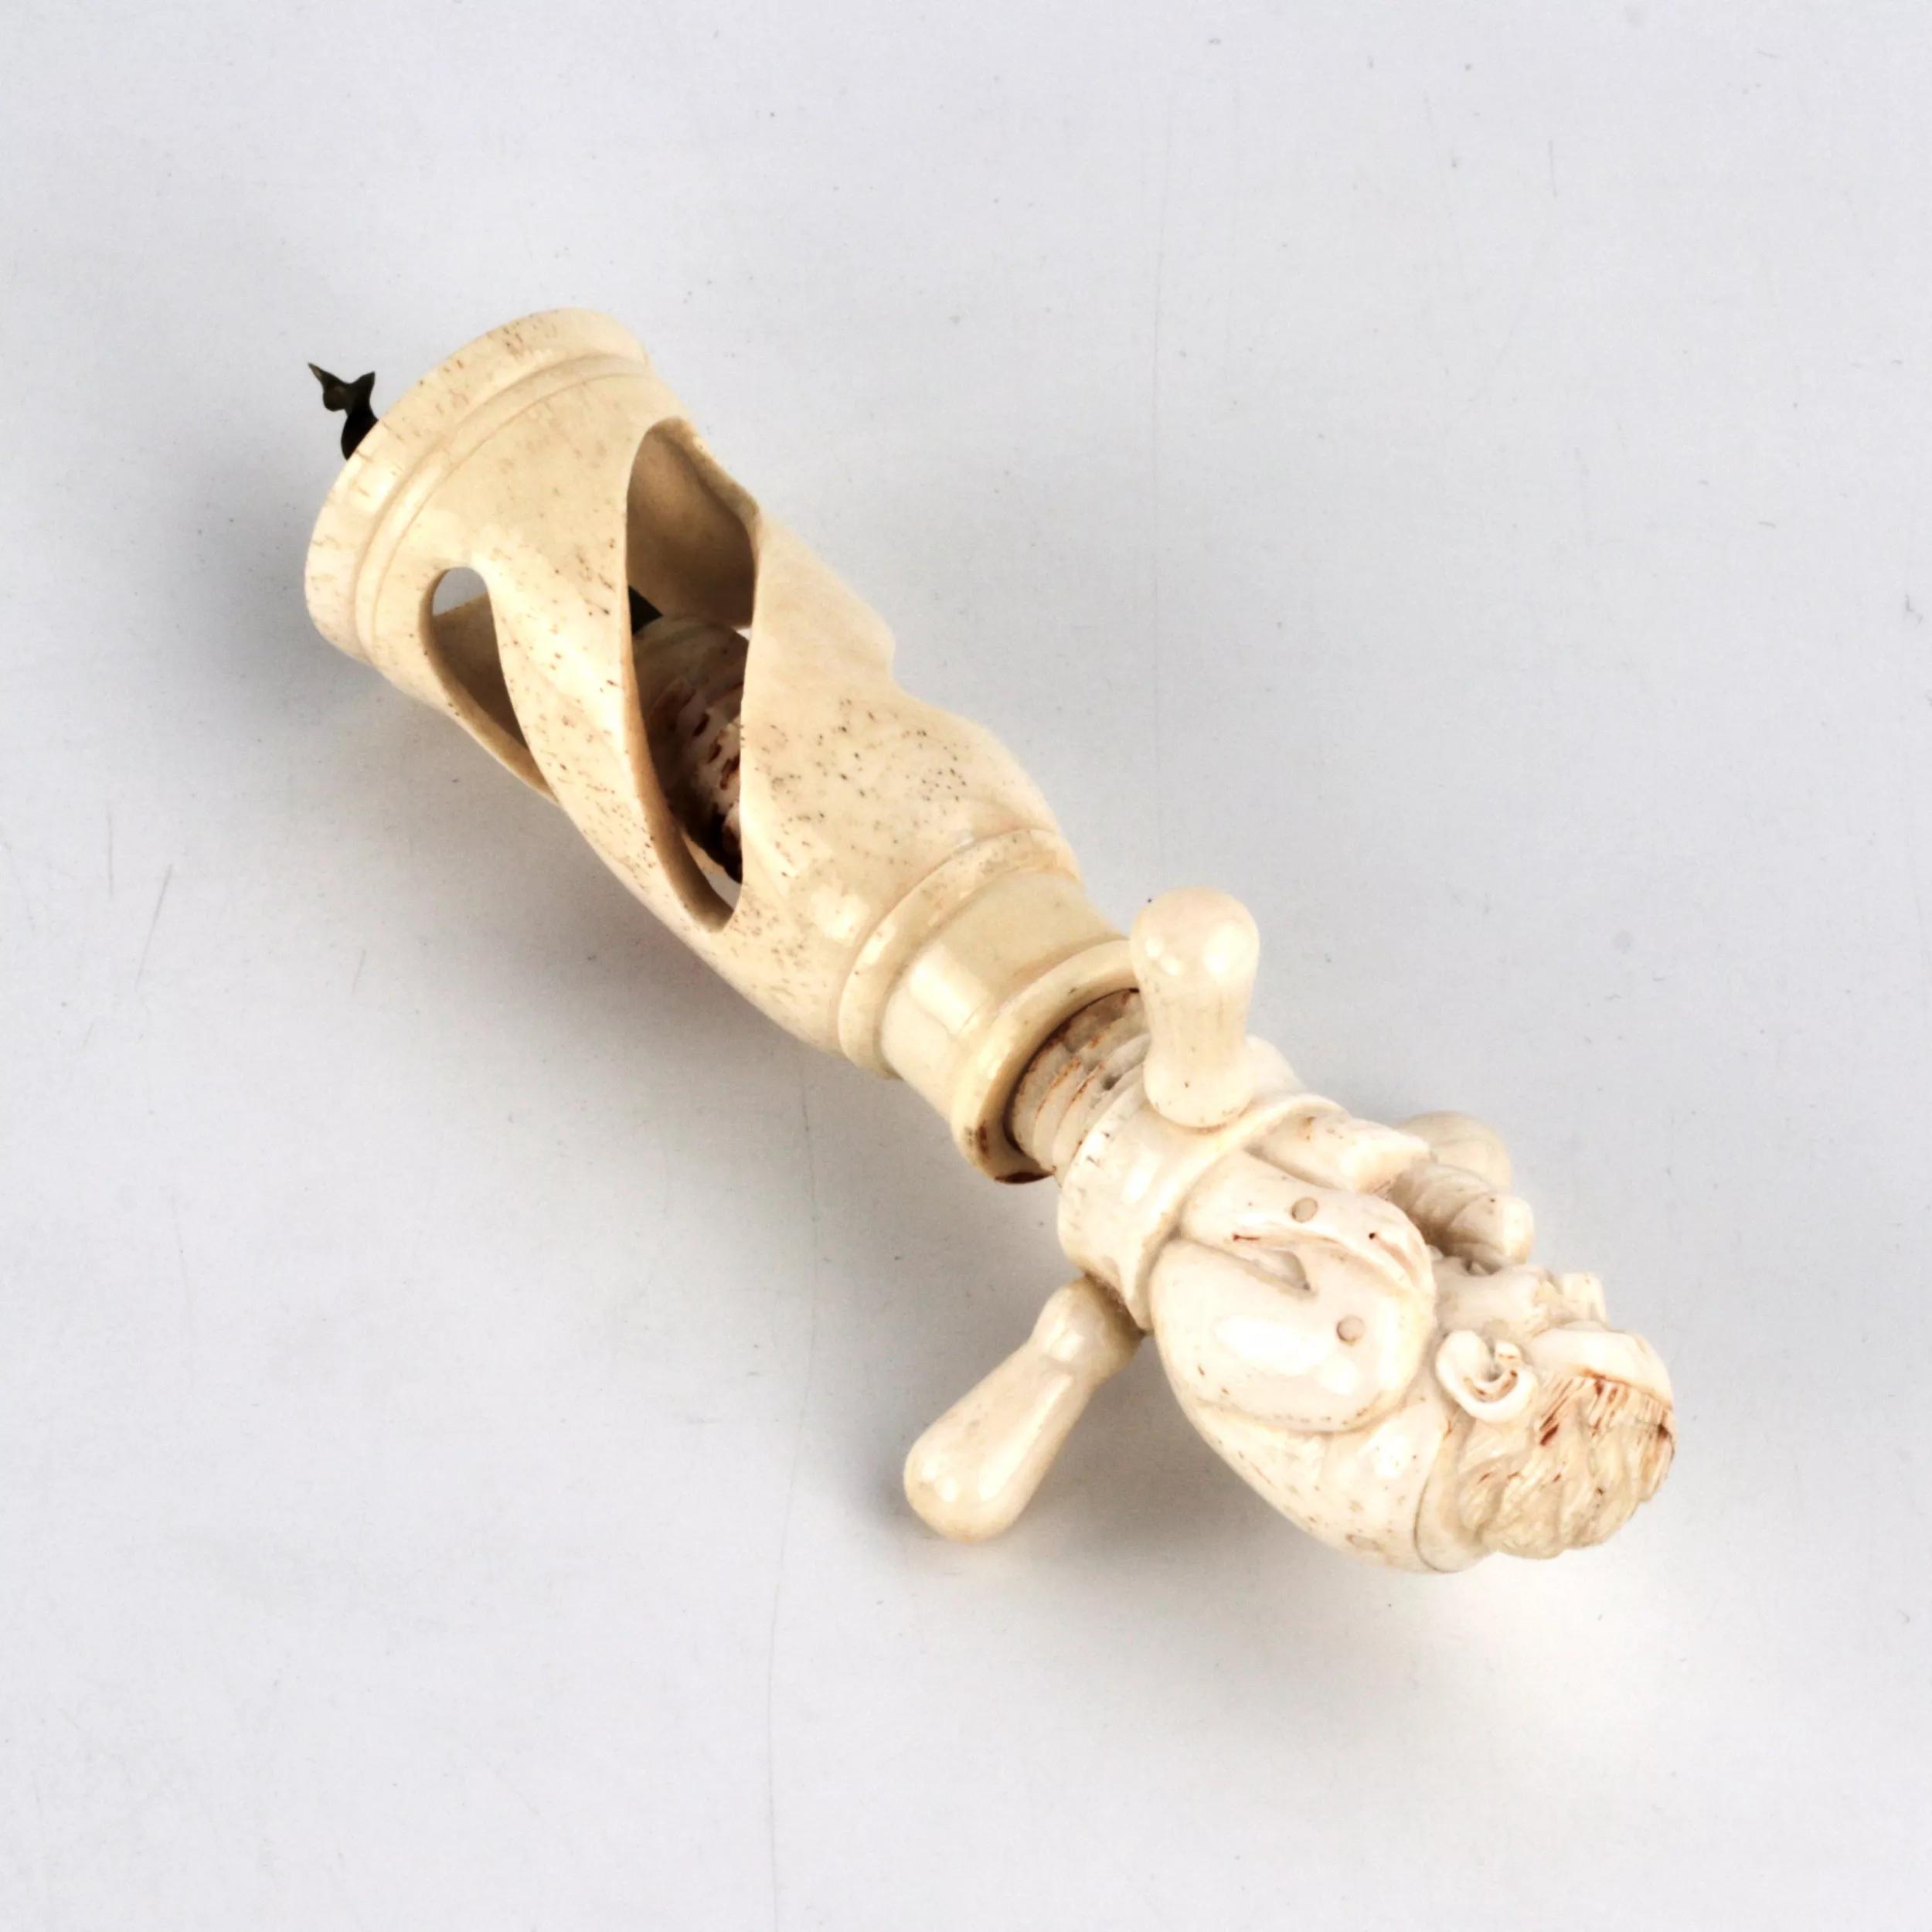 The rarest erotic ivory corkscrew of the 19th century. - Image 2 of 8